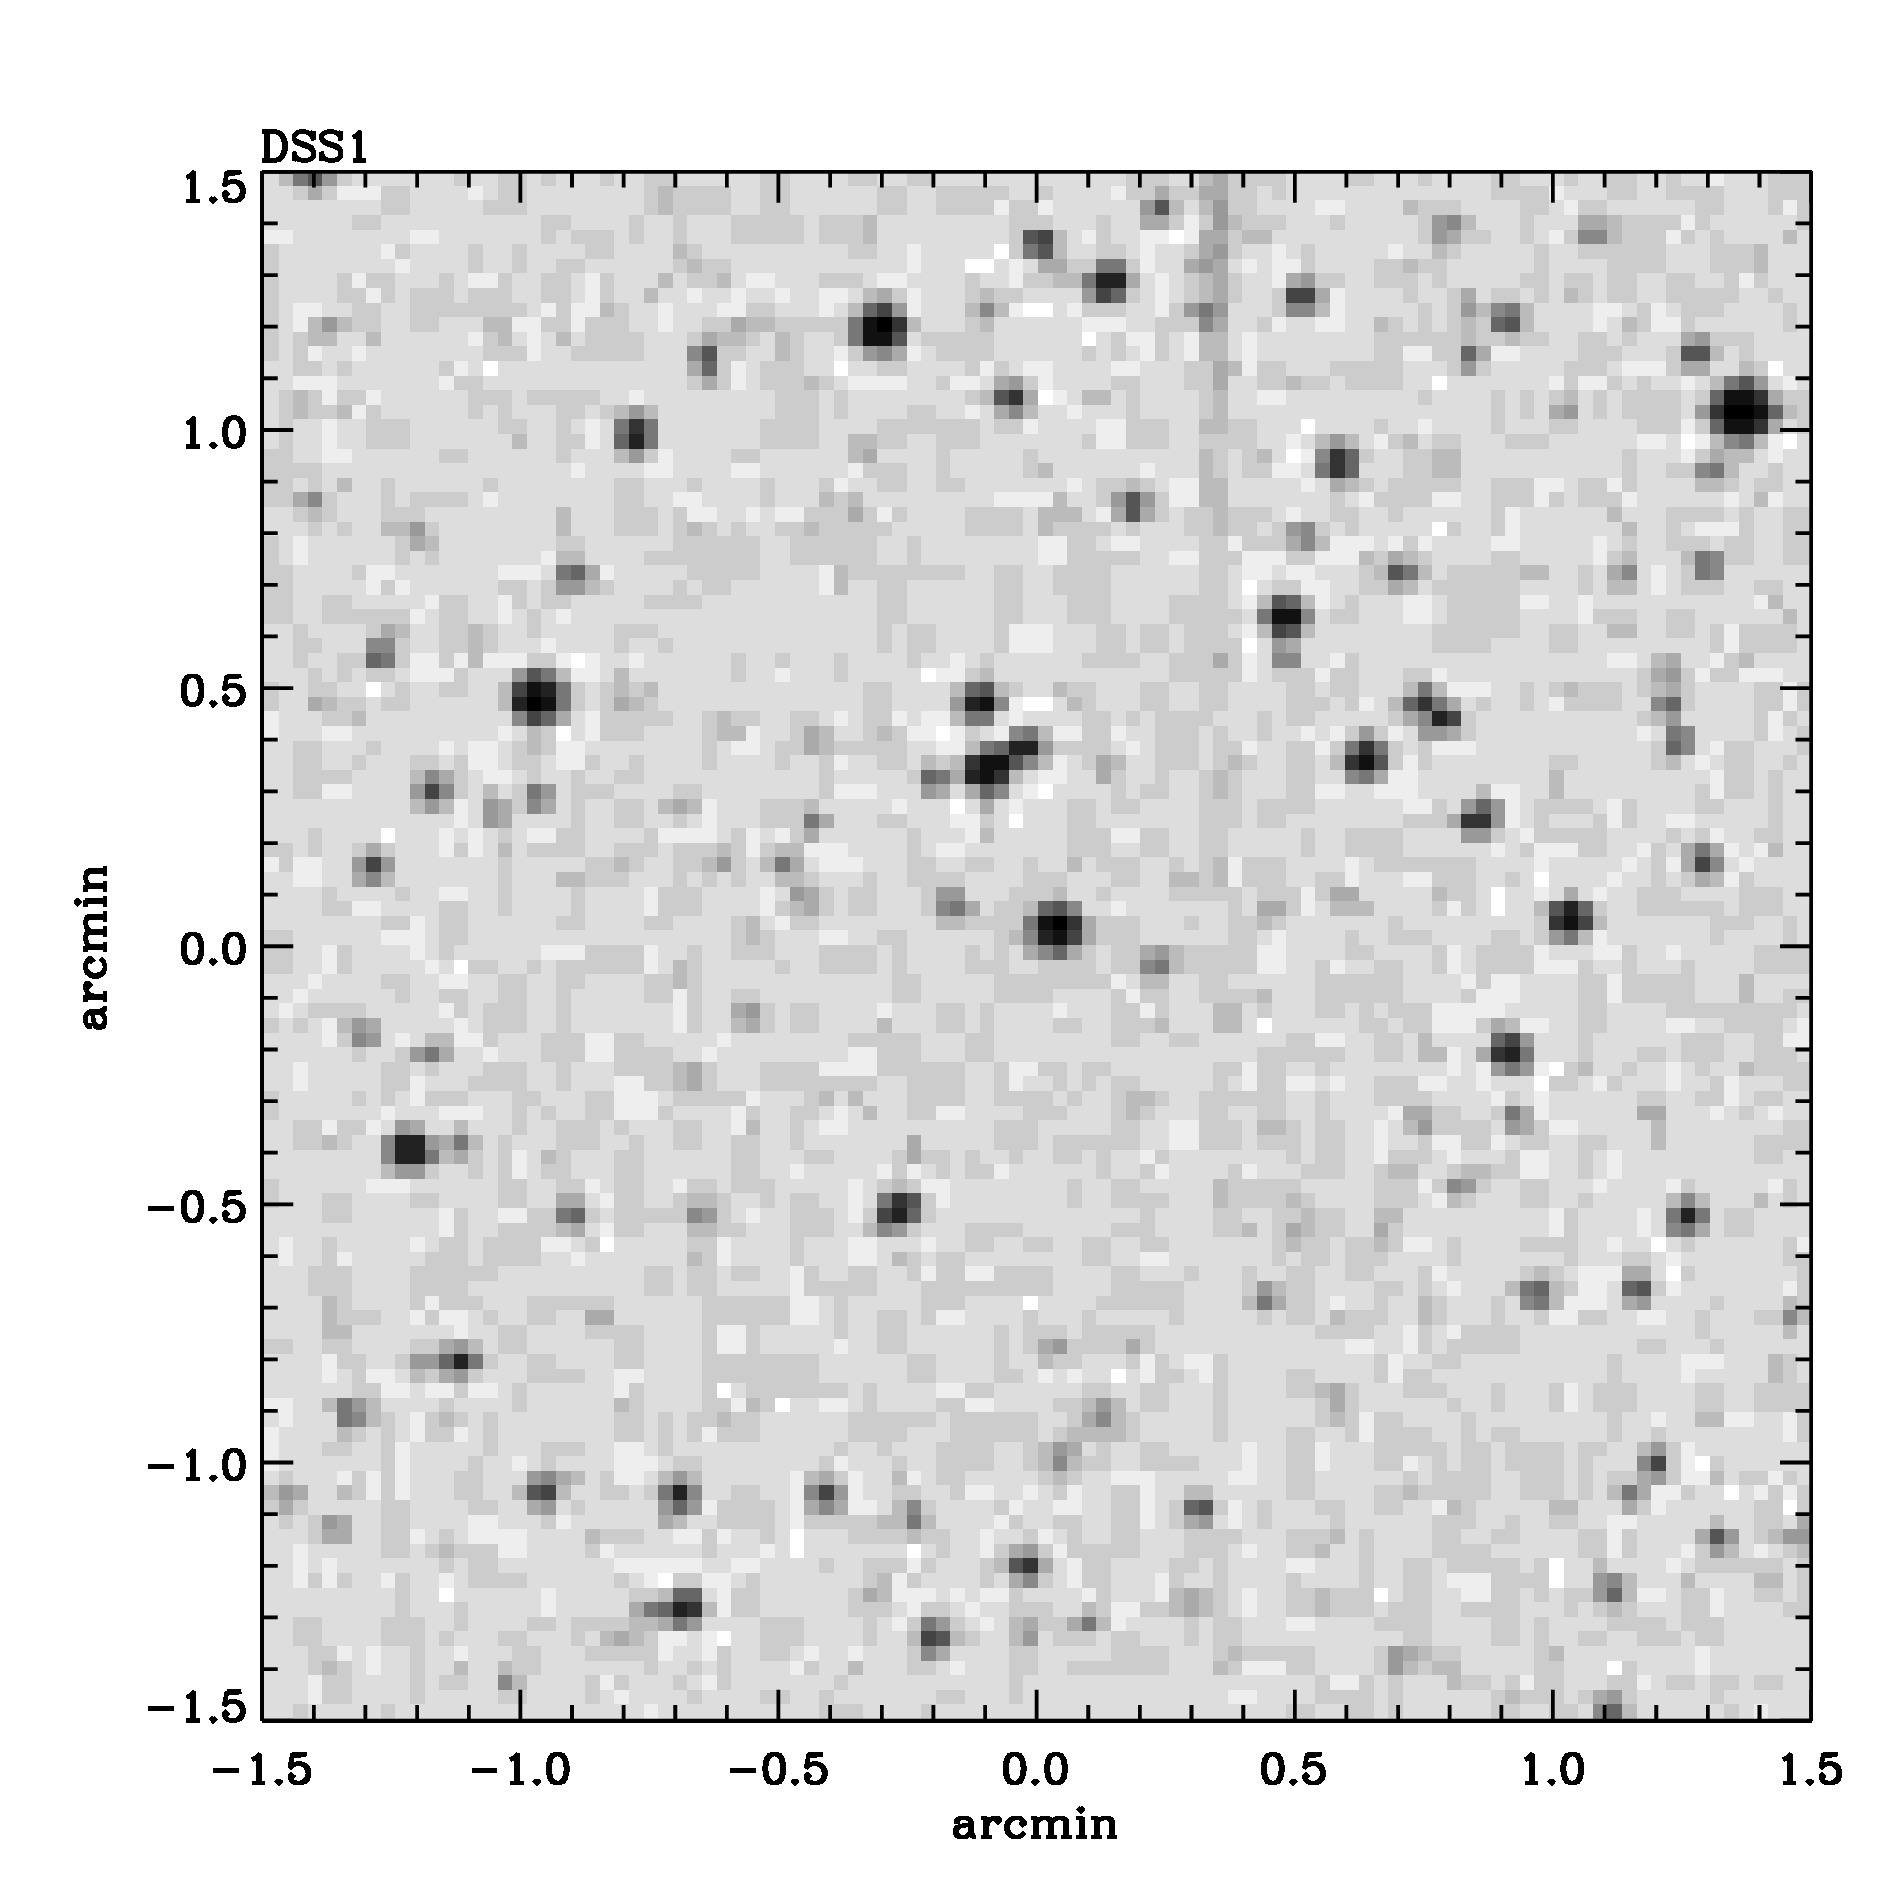 Optical image for SWIFT J1038.8-4942